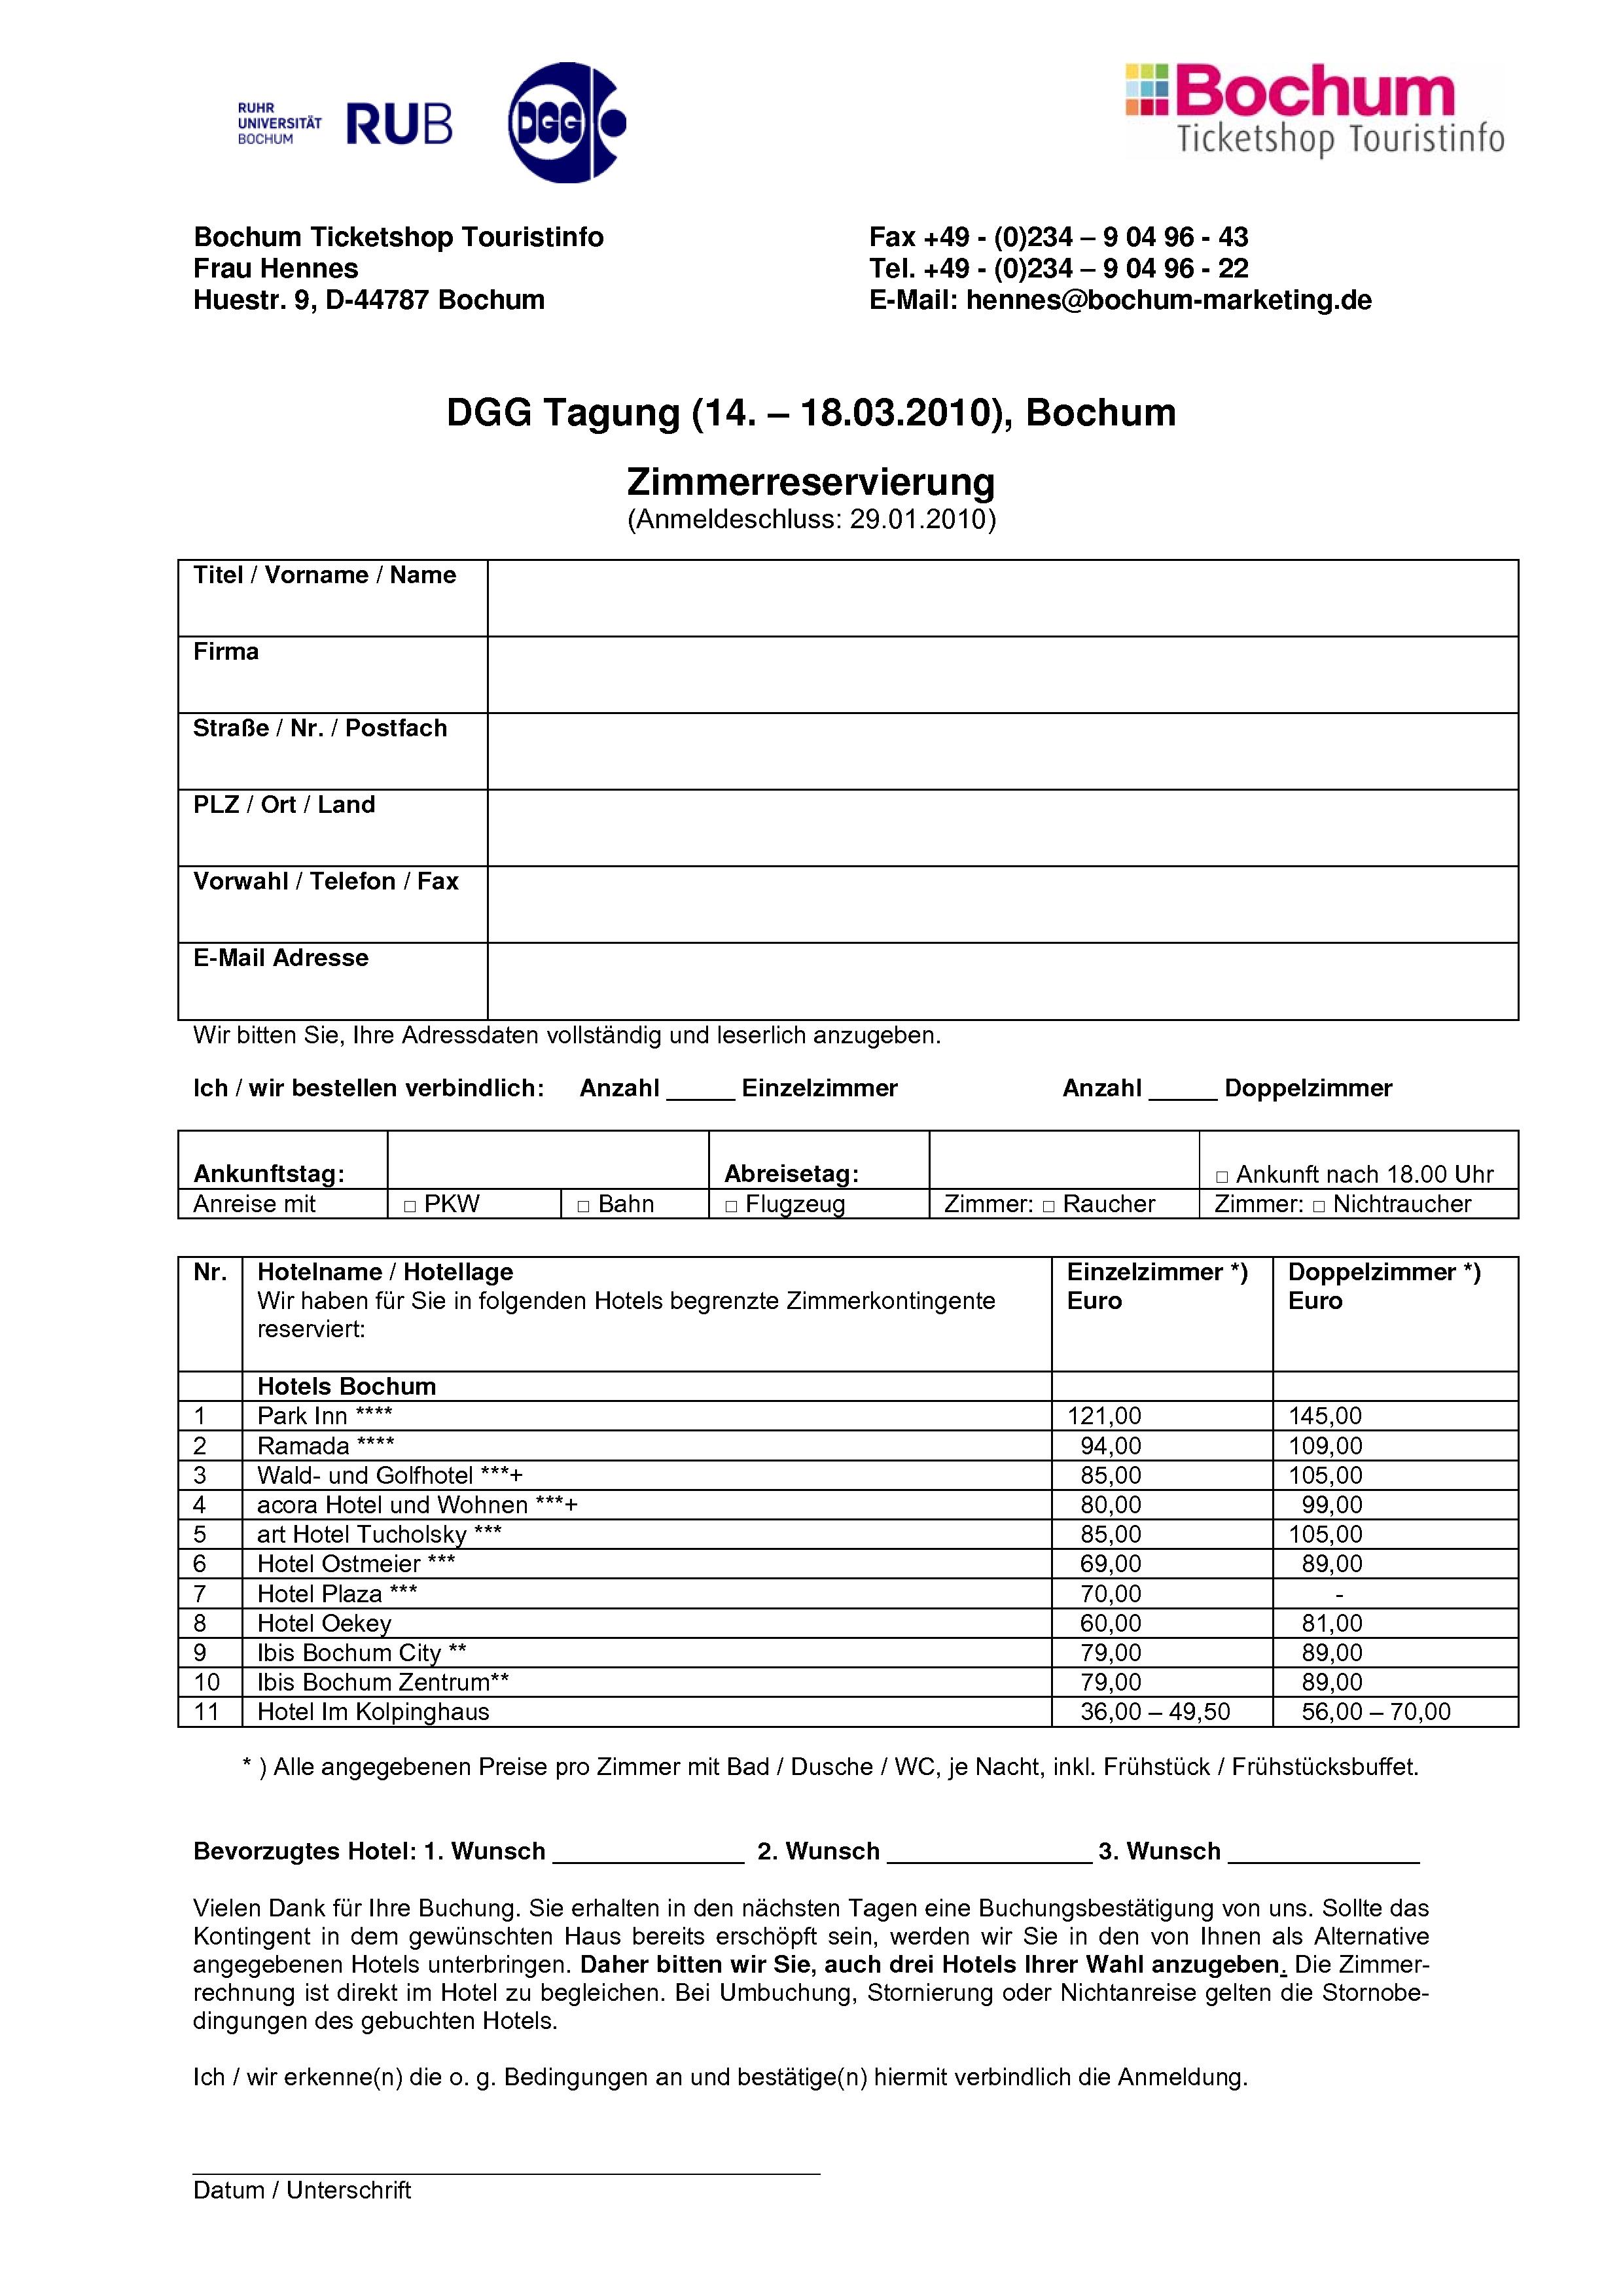 fax-hotelbuchungsformular.pdf